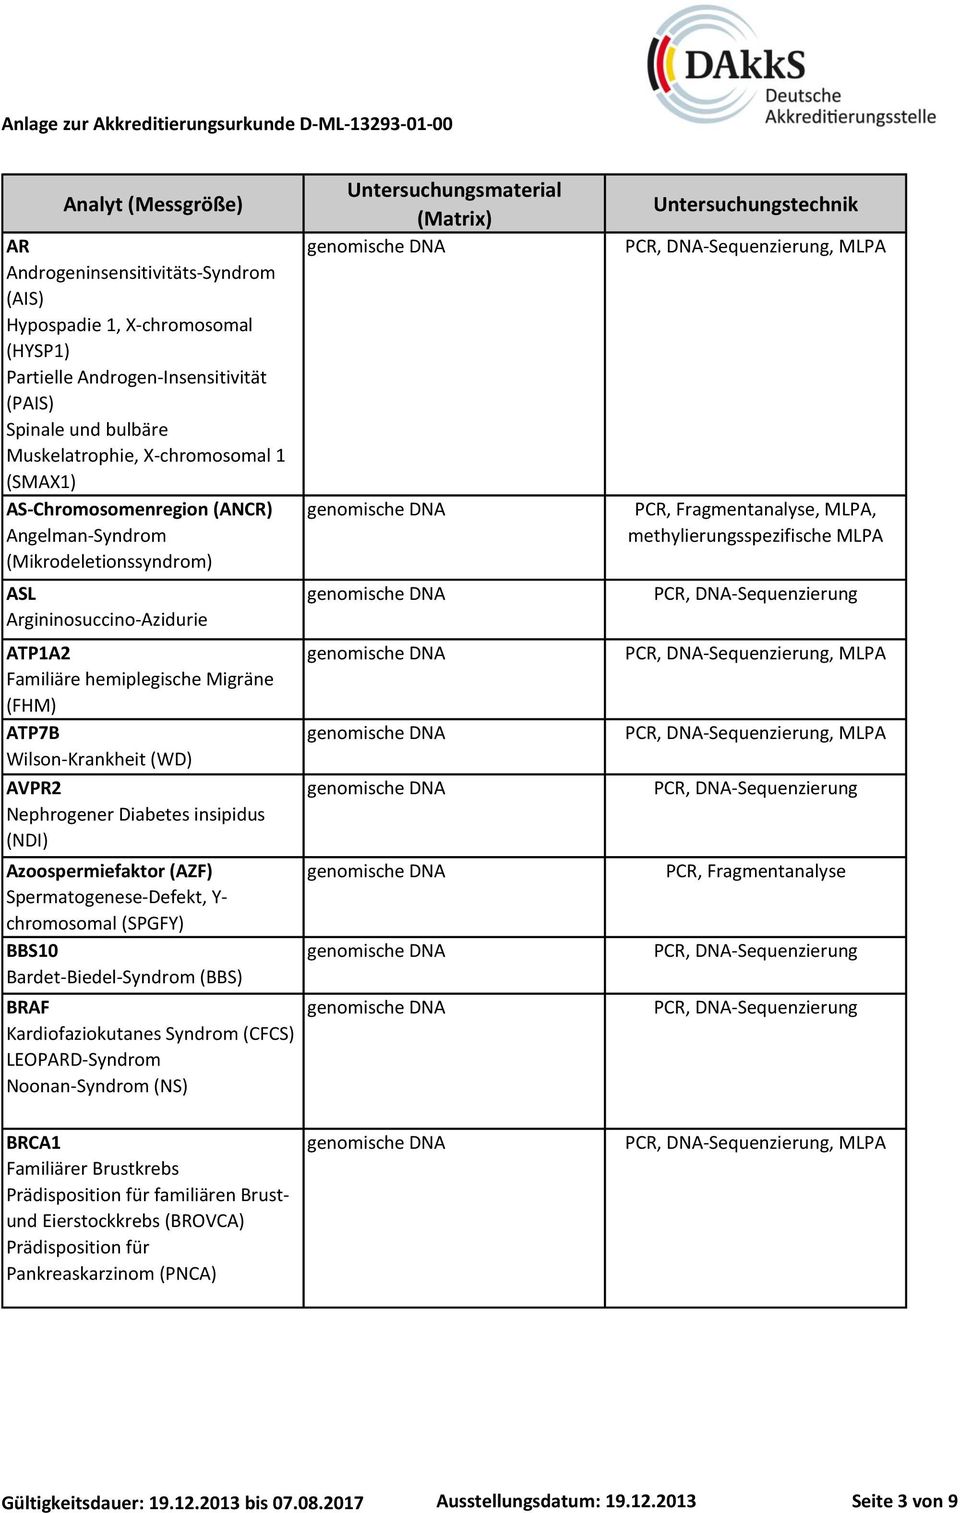 Azoospermiefaktor (AZF) Spermatogenese-Defekt, Y- chromosomal (SPGFY) BBS10 Bardet-Biedel-Syndrom (BBS) BRAF Kardiofaziokutanes Syndrom (CFCS) LEOPARD-Syndrom Noonan-Syndrom (NS) PCR,